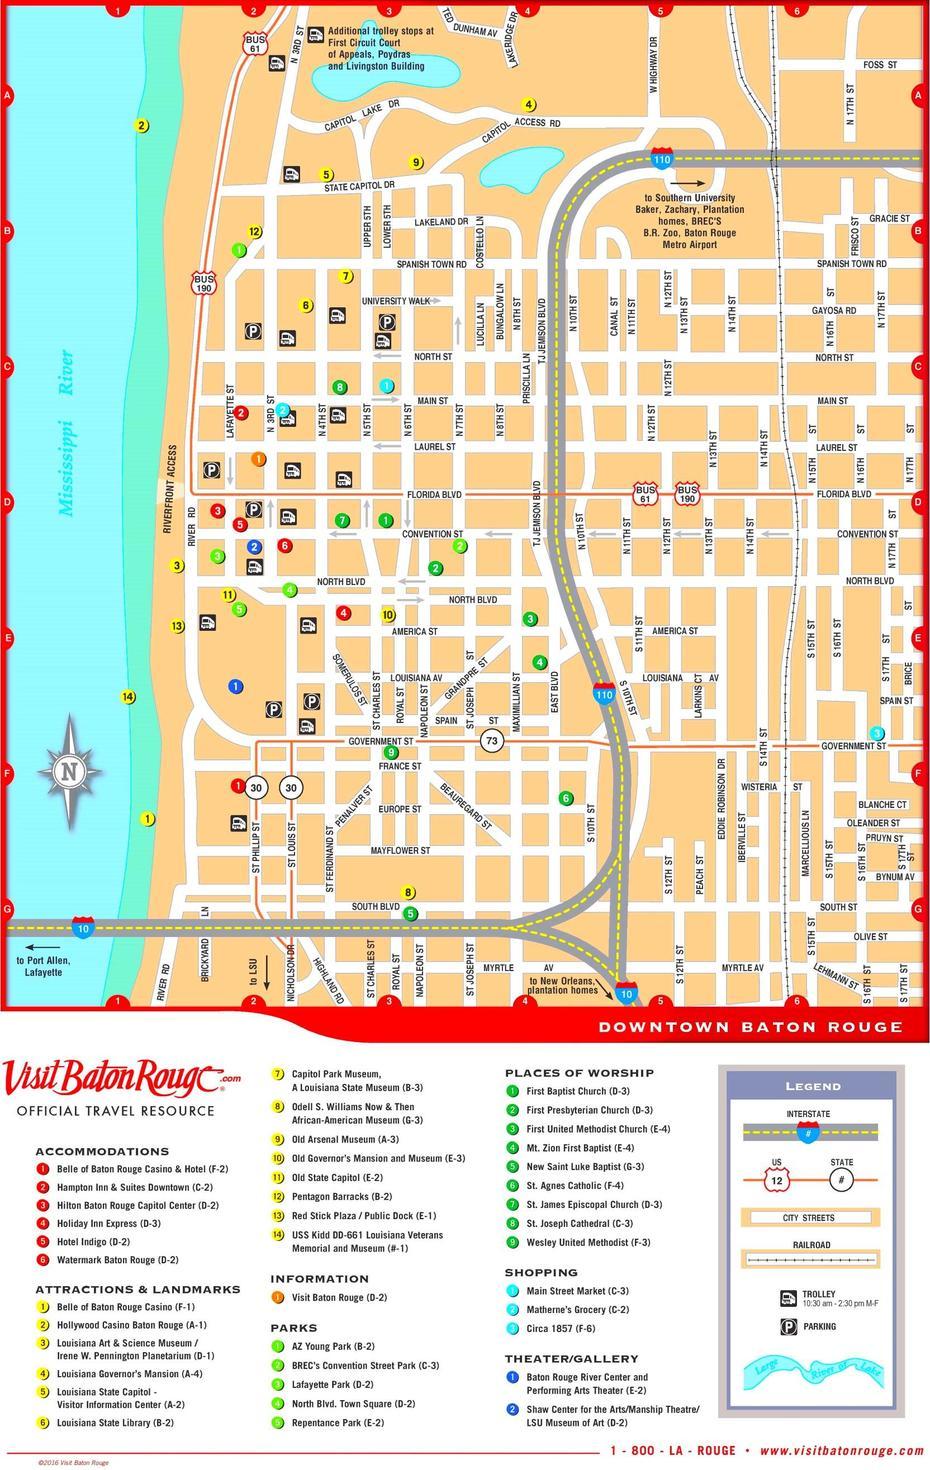 Baton Rouge Downtown Map, Baton Rouge, United States, Baton Rouge City, Louisiana State Capitol Building